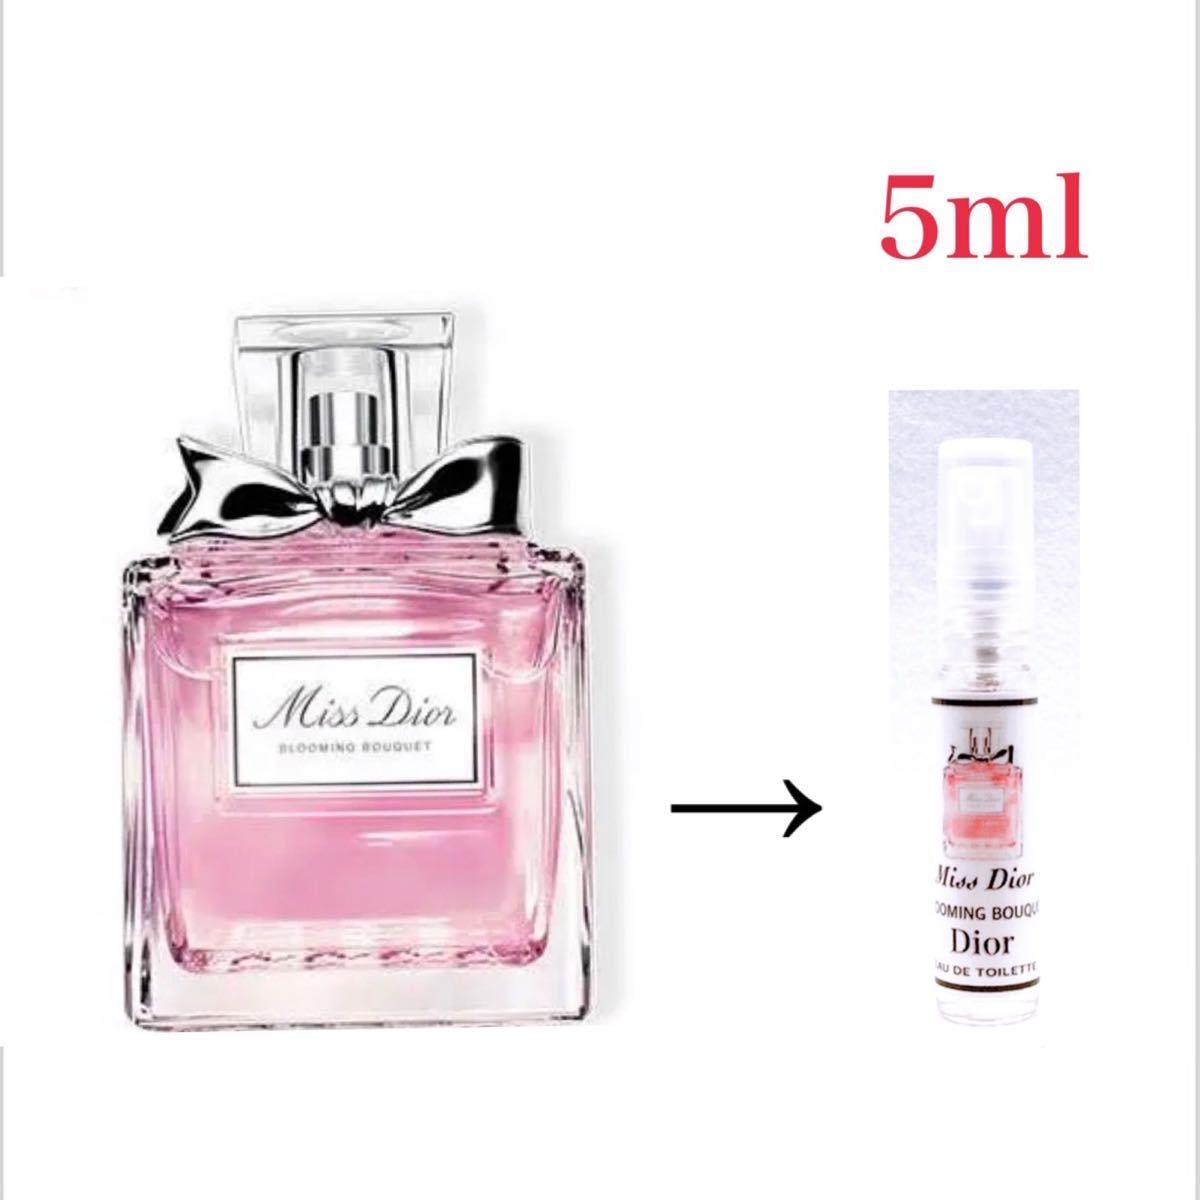 Dior ミスディオール ブルーミングブケー EDT 5ml 天香香水